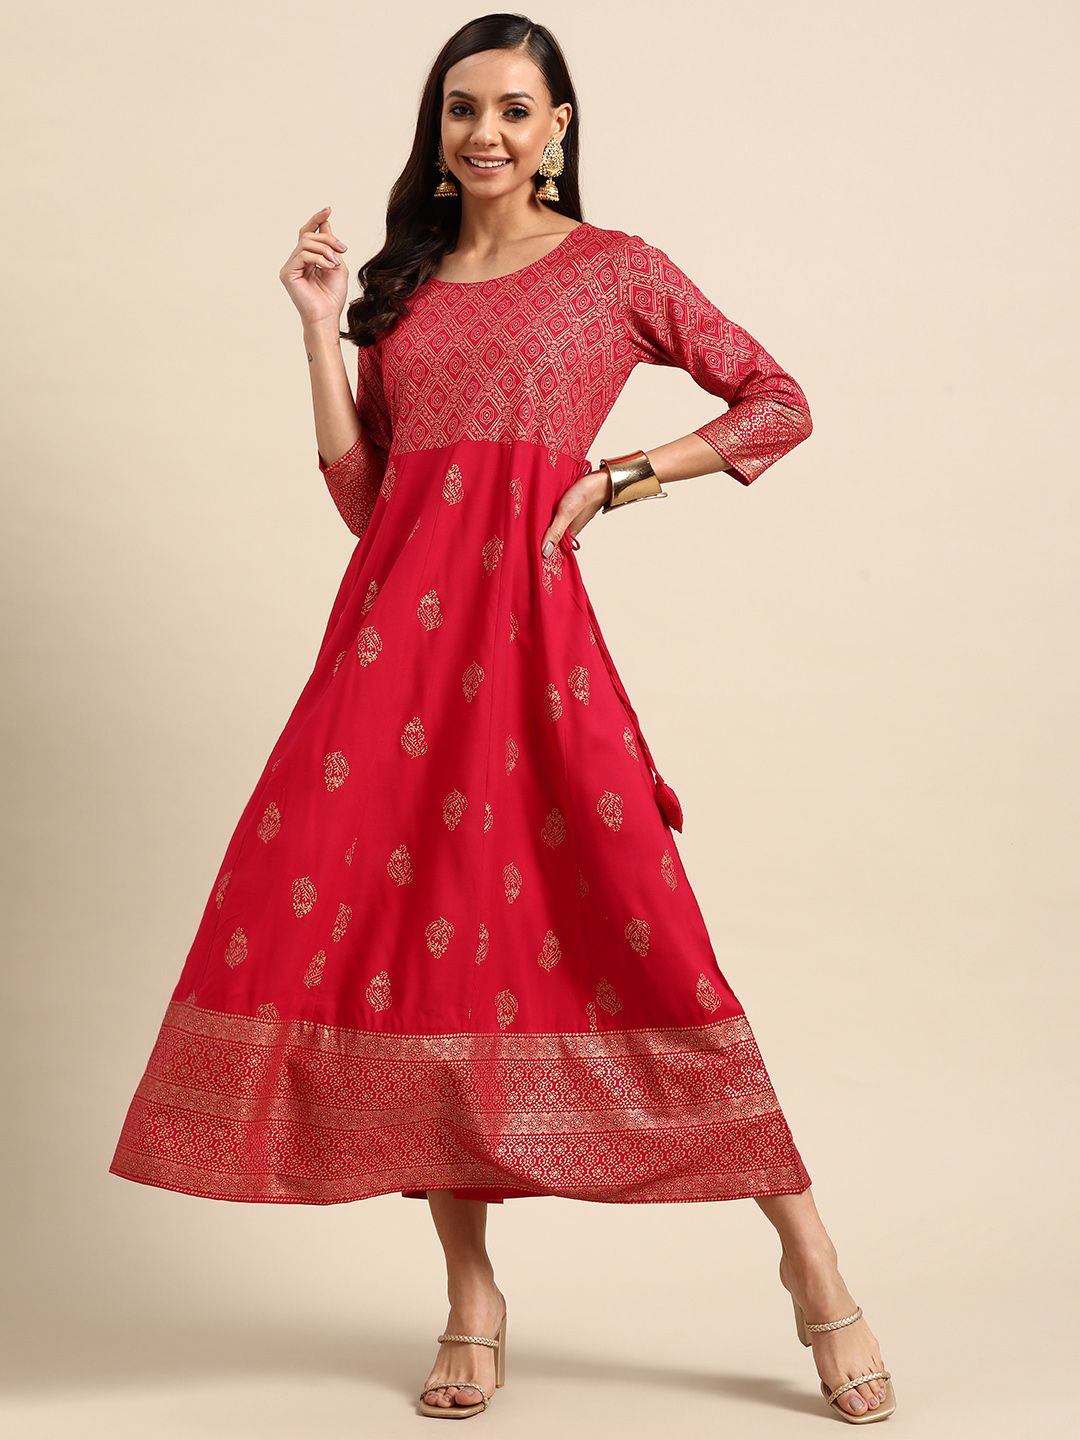 GERUA Magenta & Gold-Toned Ethnic Motifs Ethnic Midi Dress Price in India